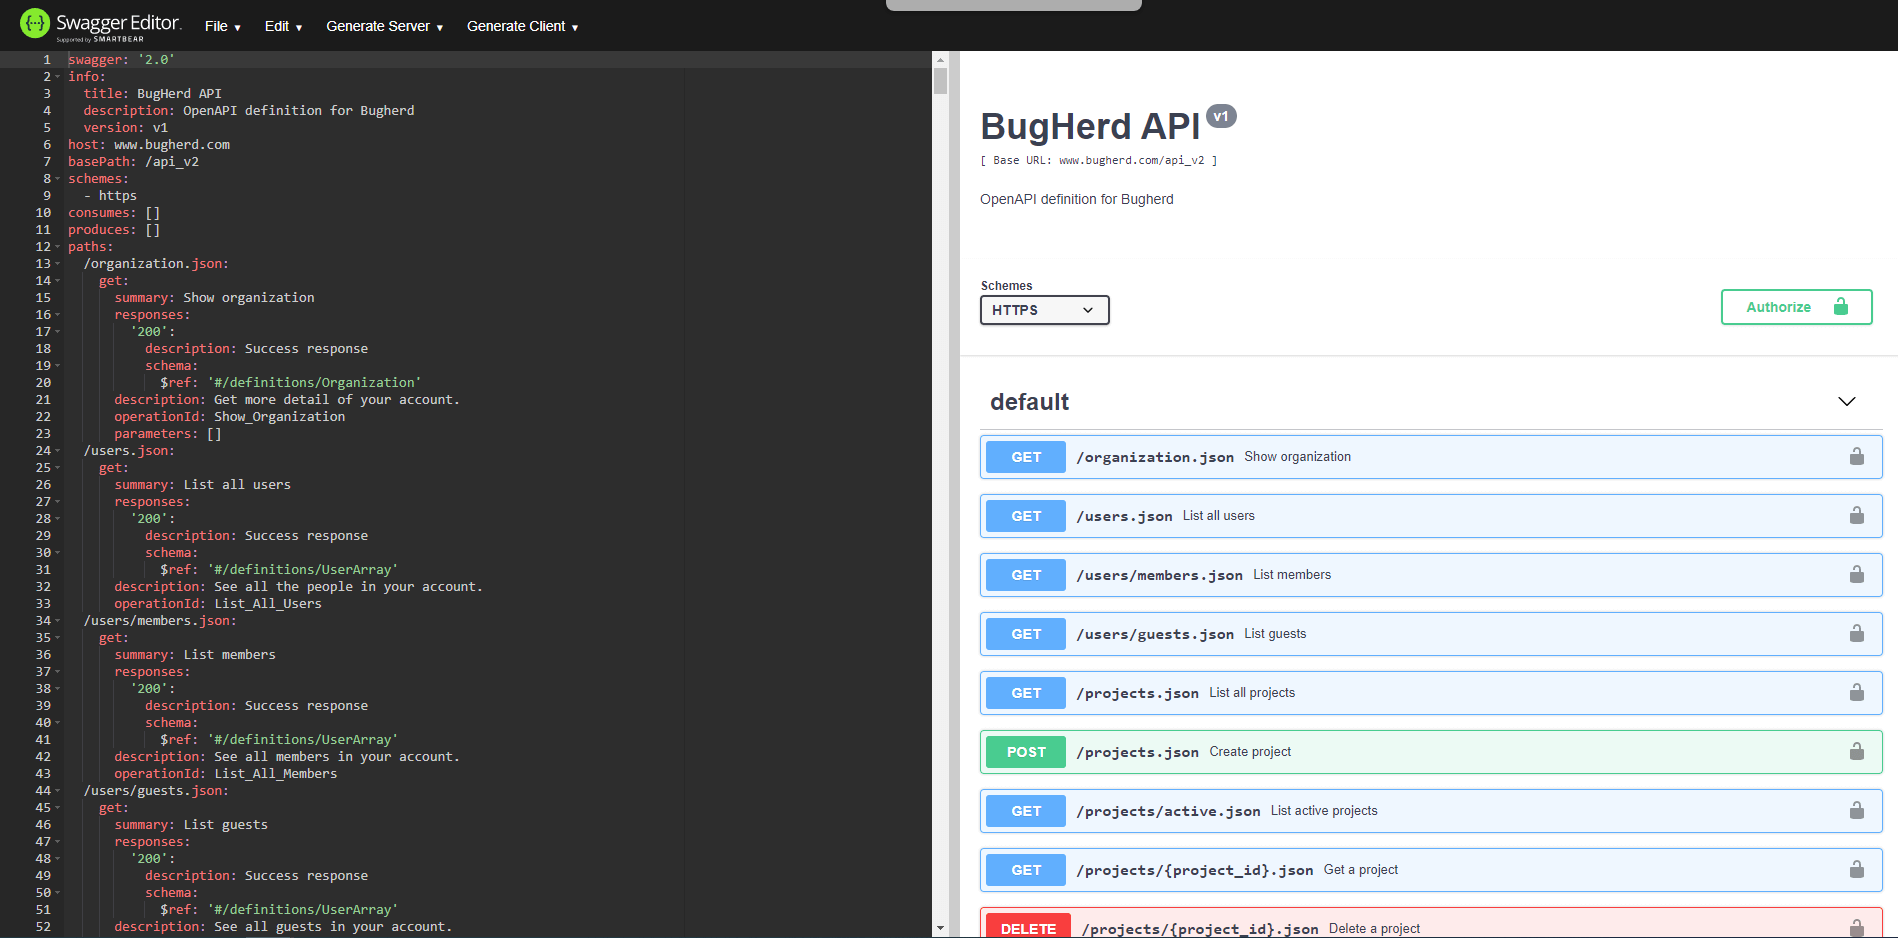 Figure 1:BugHerd API in Swagger Editor